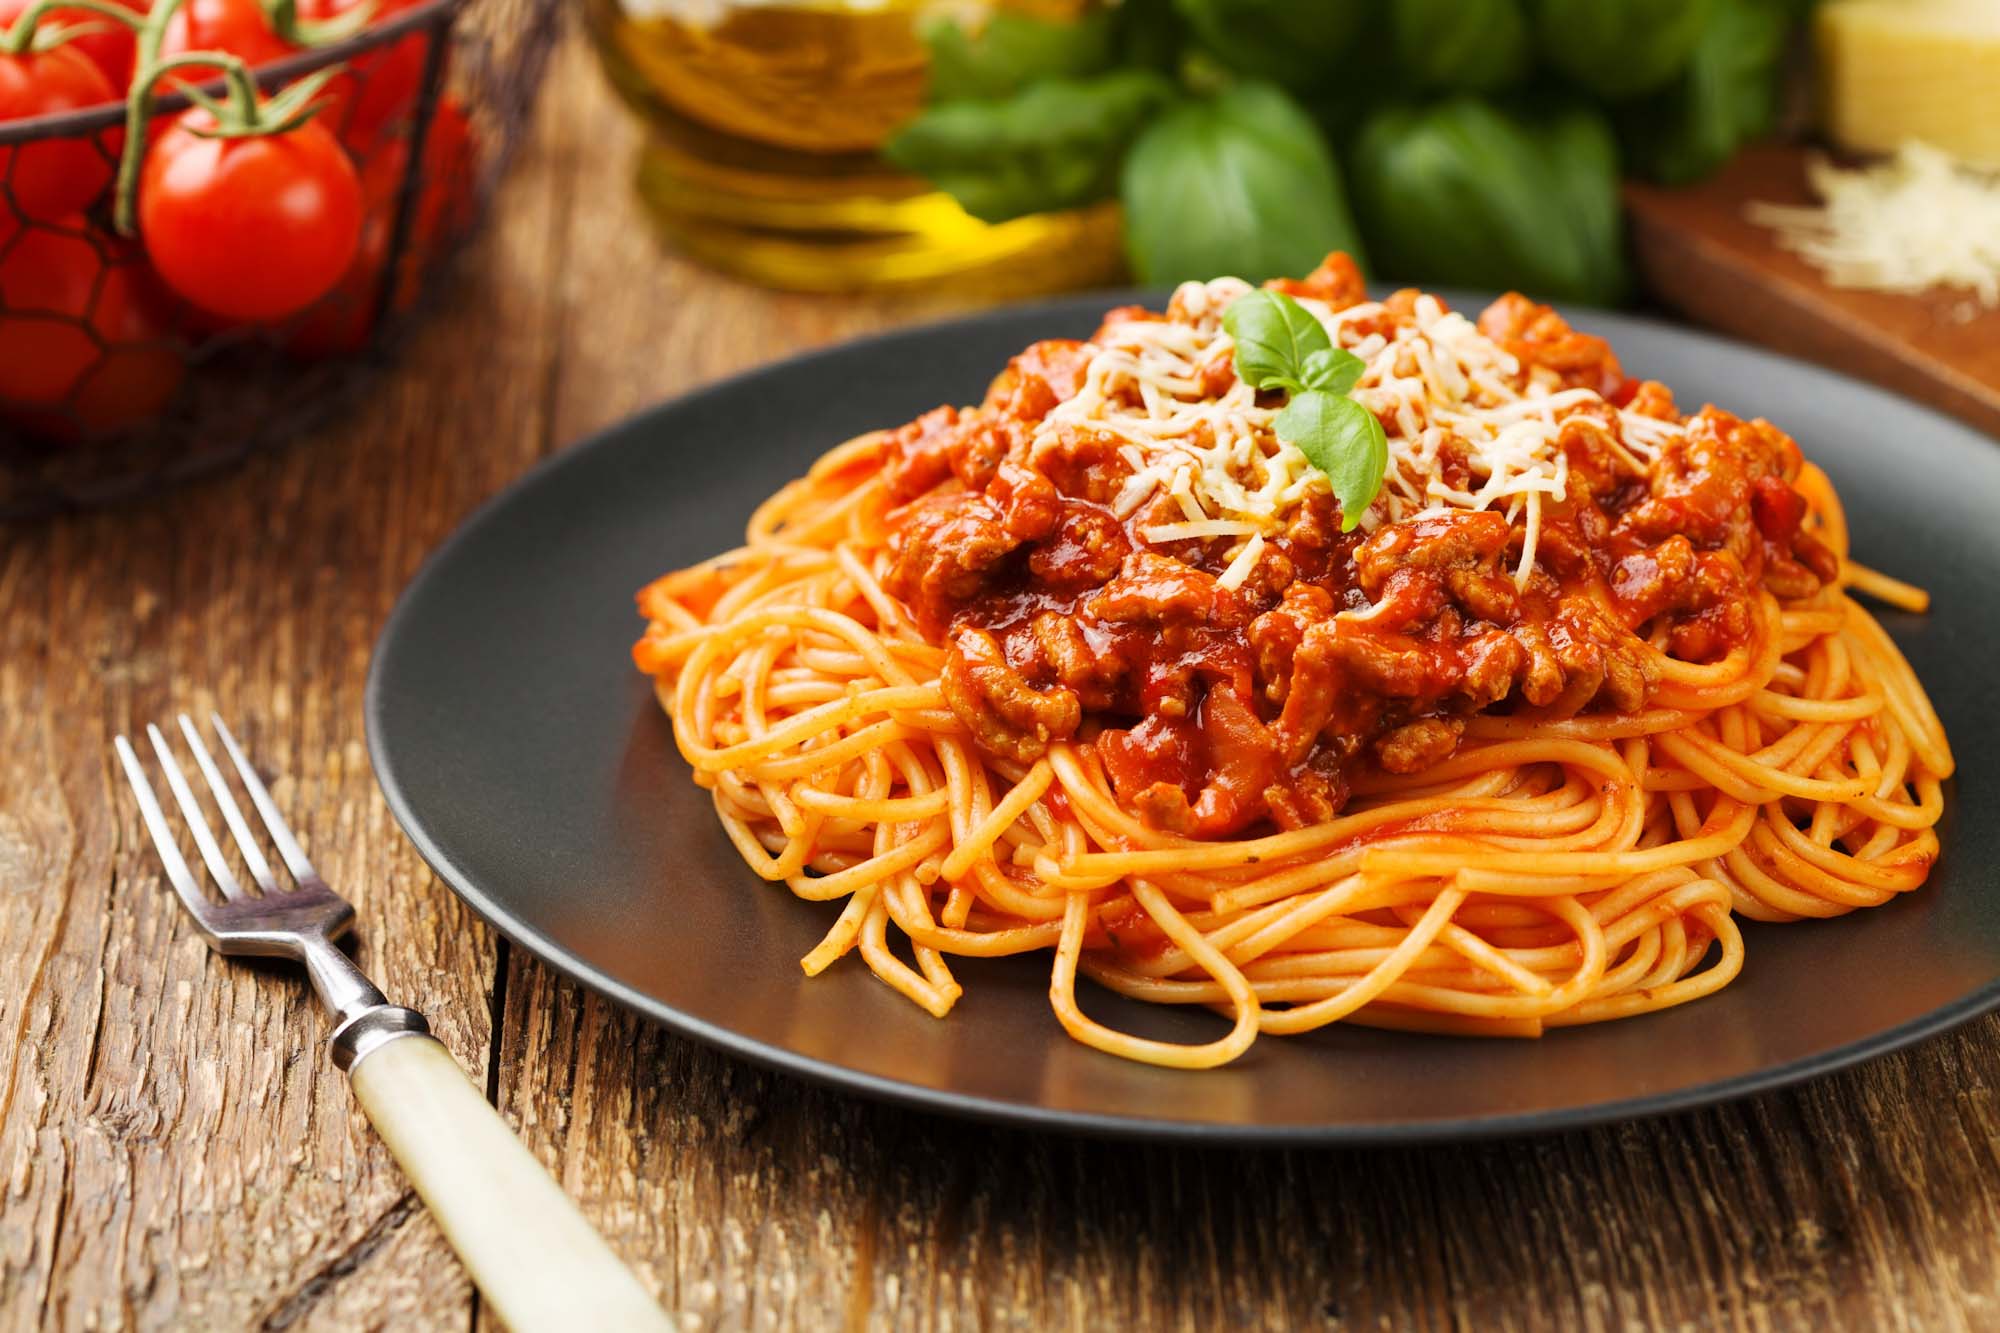 A plate of Spaghetti bolognaise